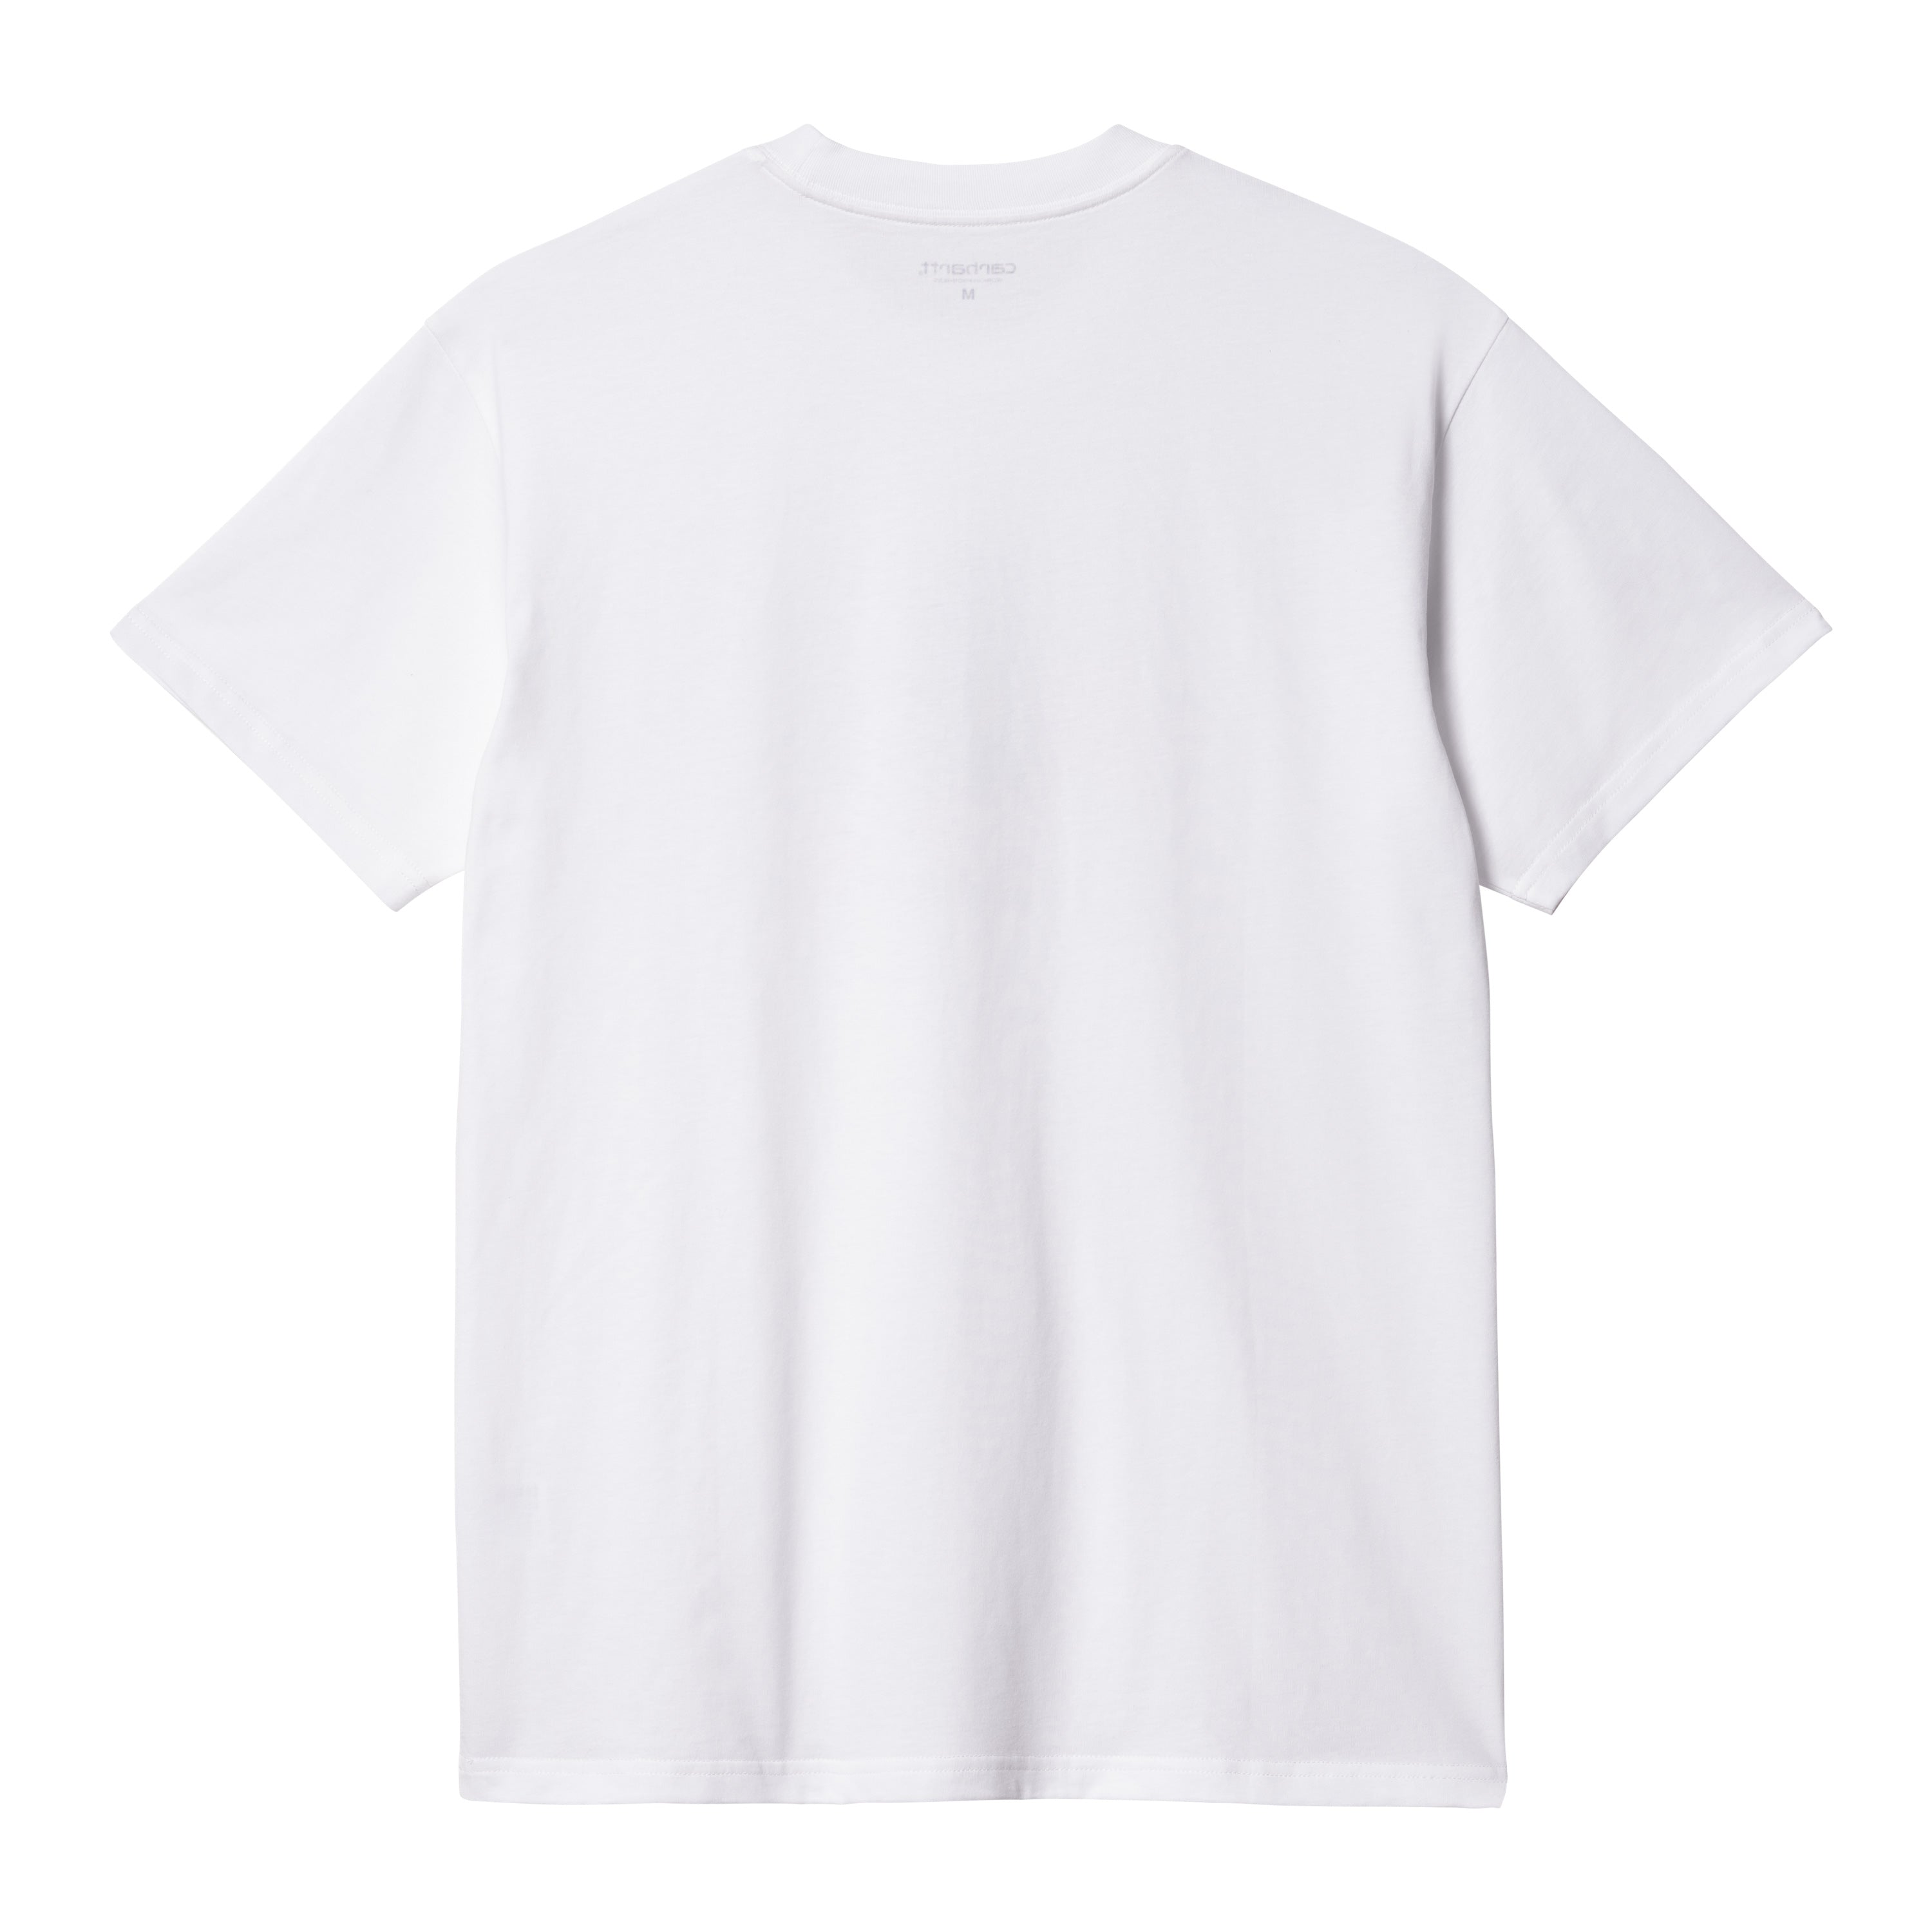 Carhartt WIP Stone Cold T-shirt - White